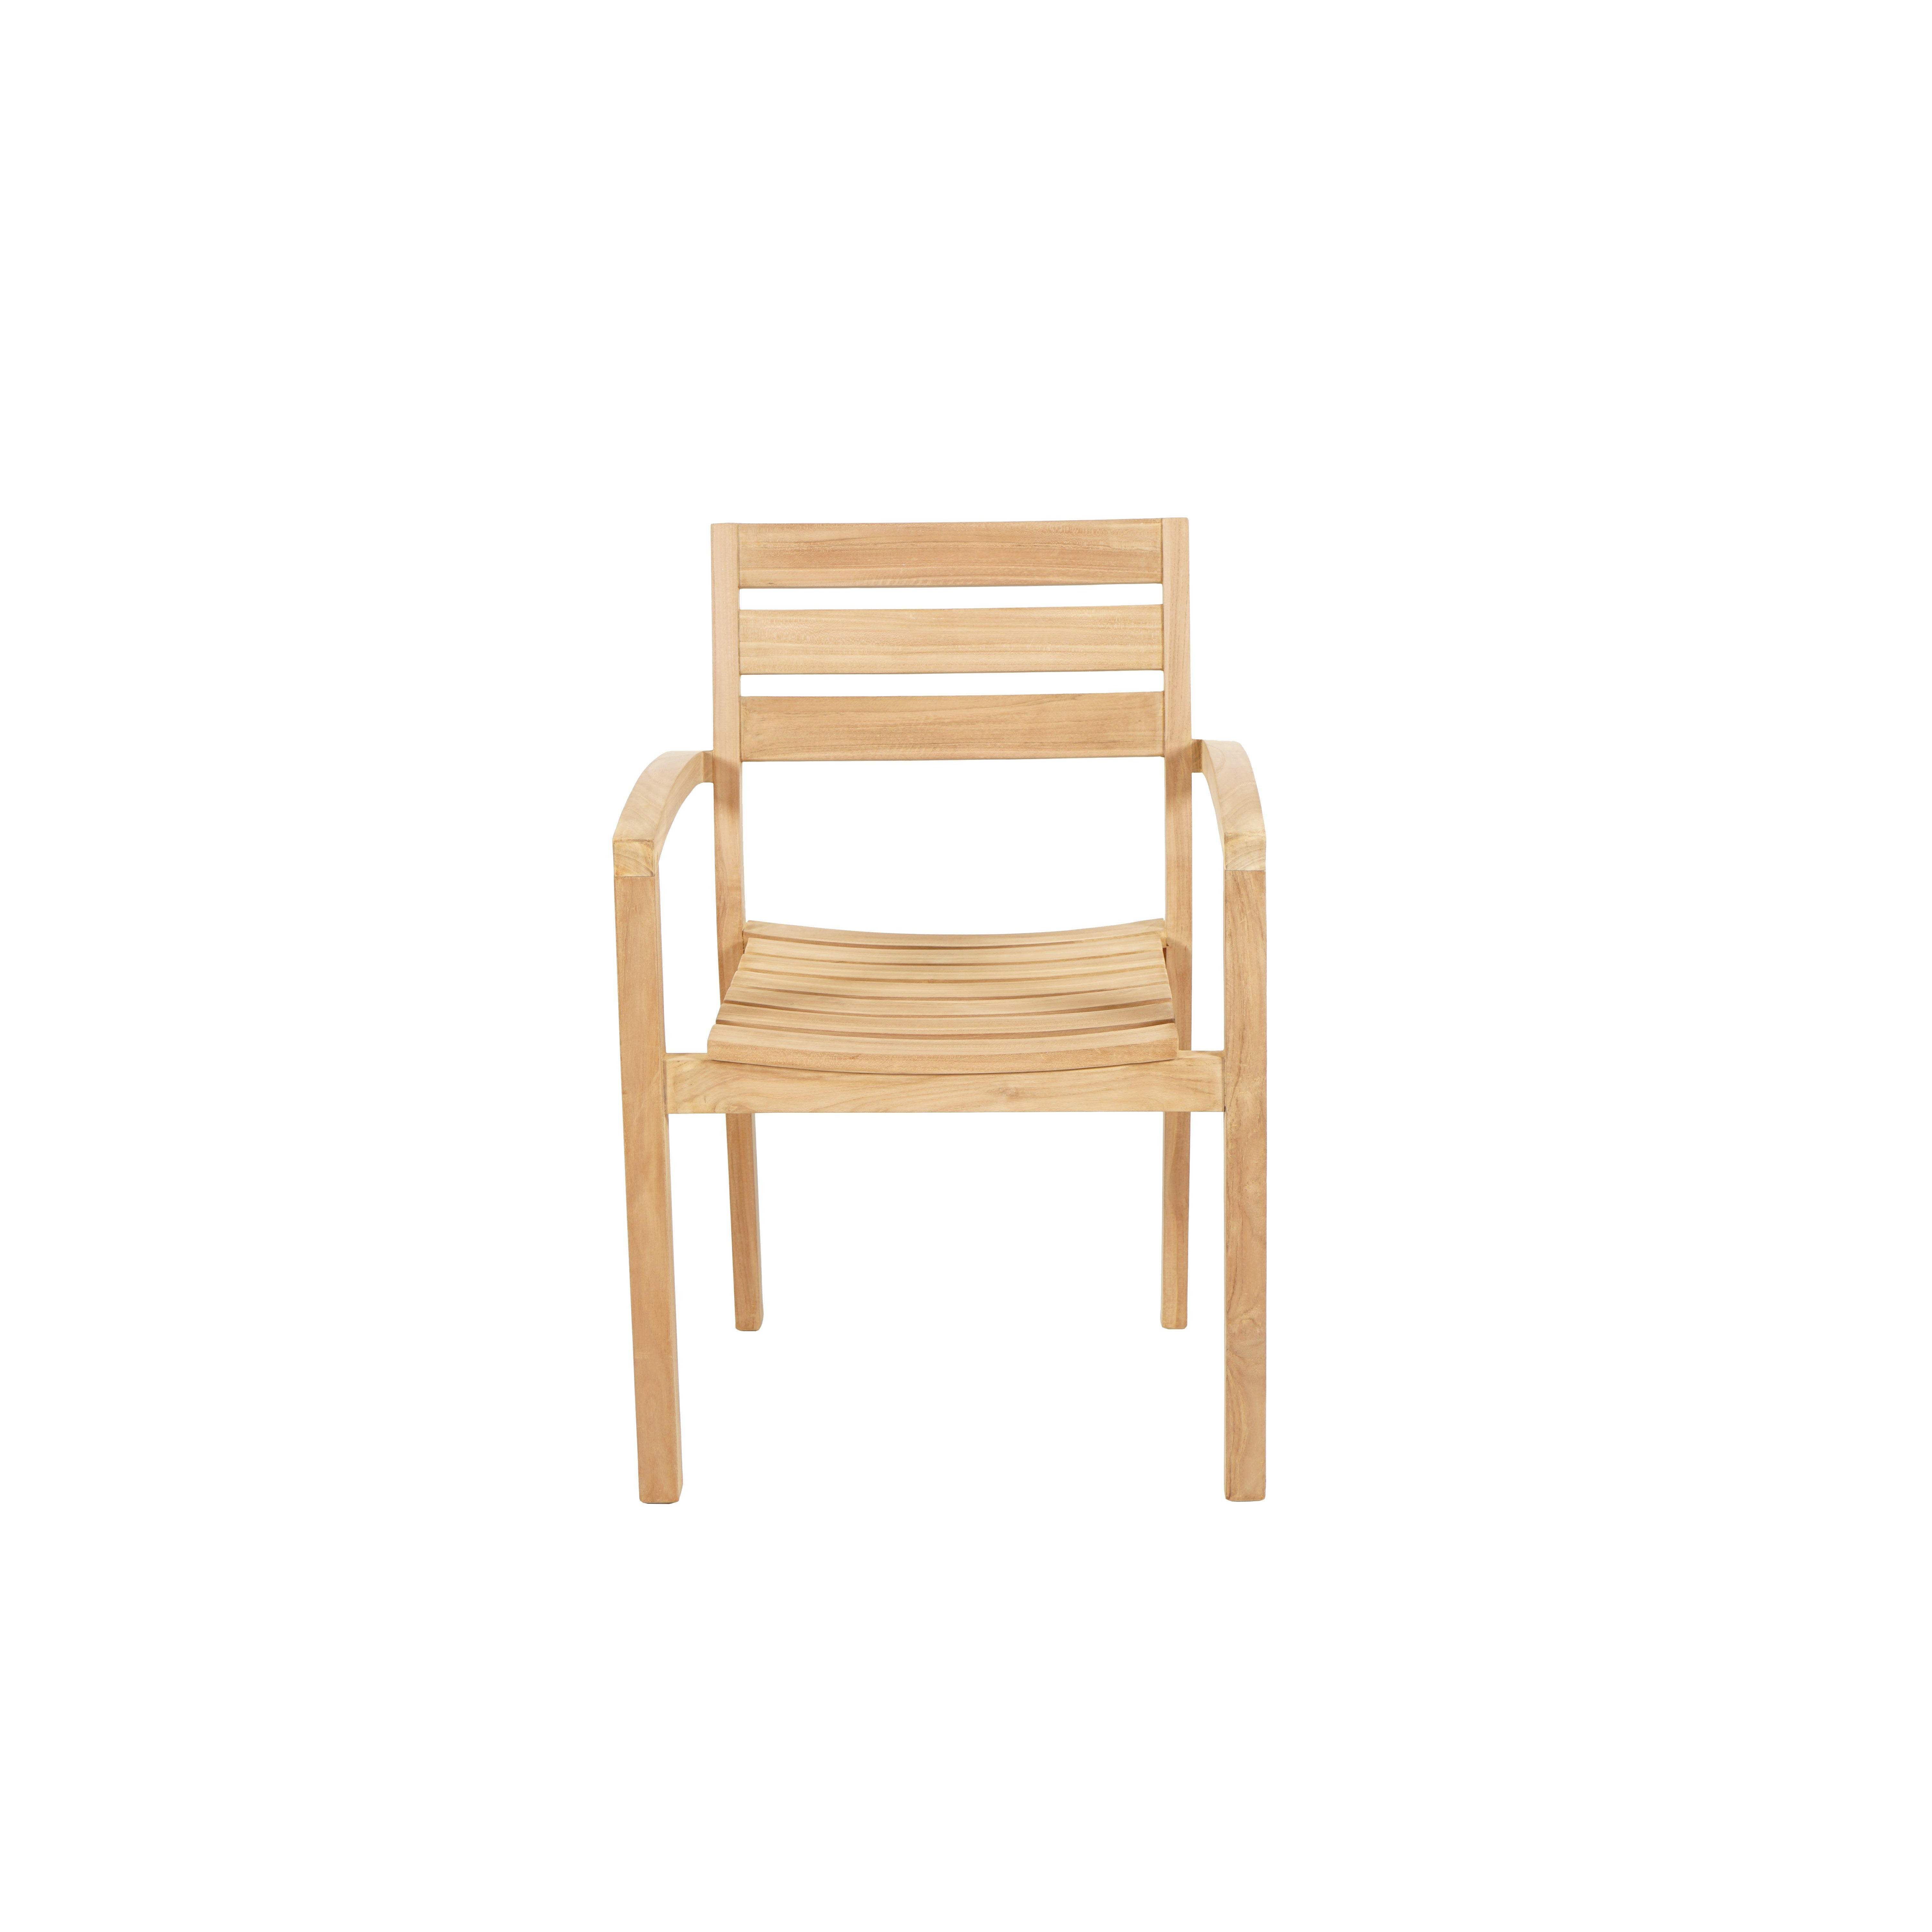 Thorpe Teak Outdoor Dining Chair - image 1